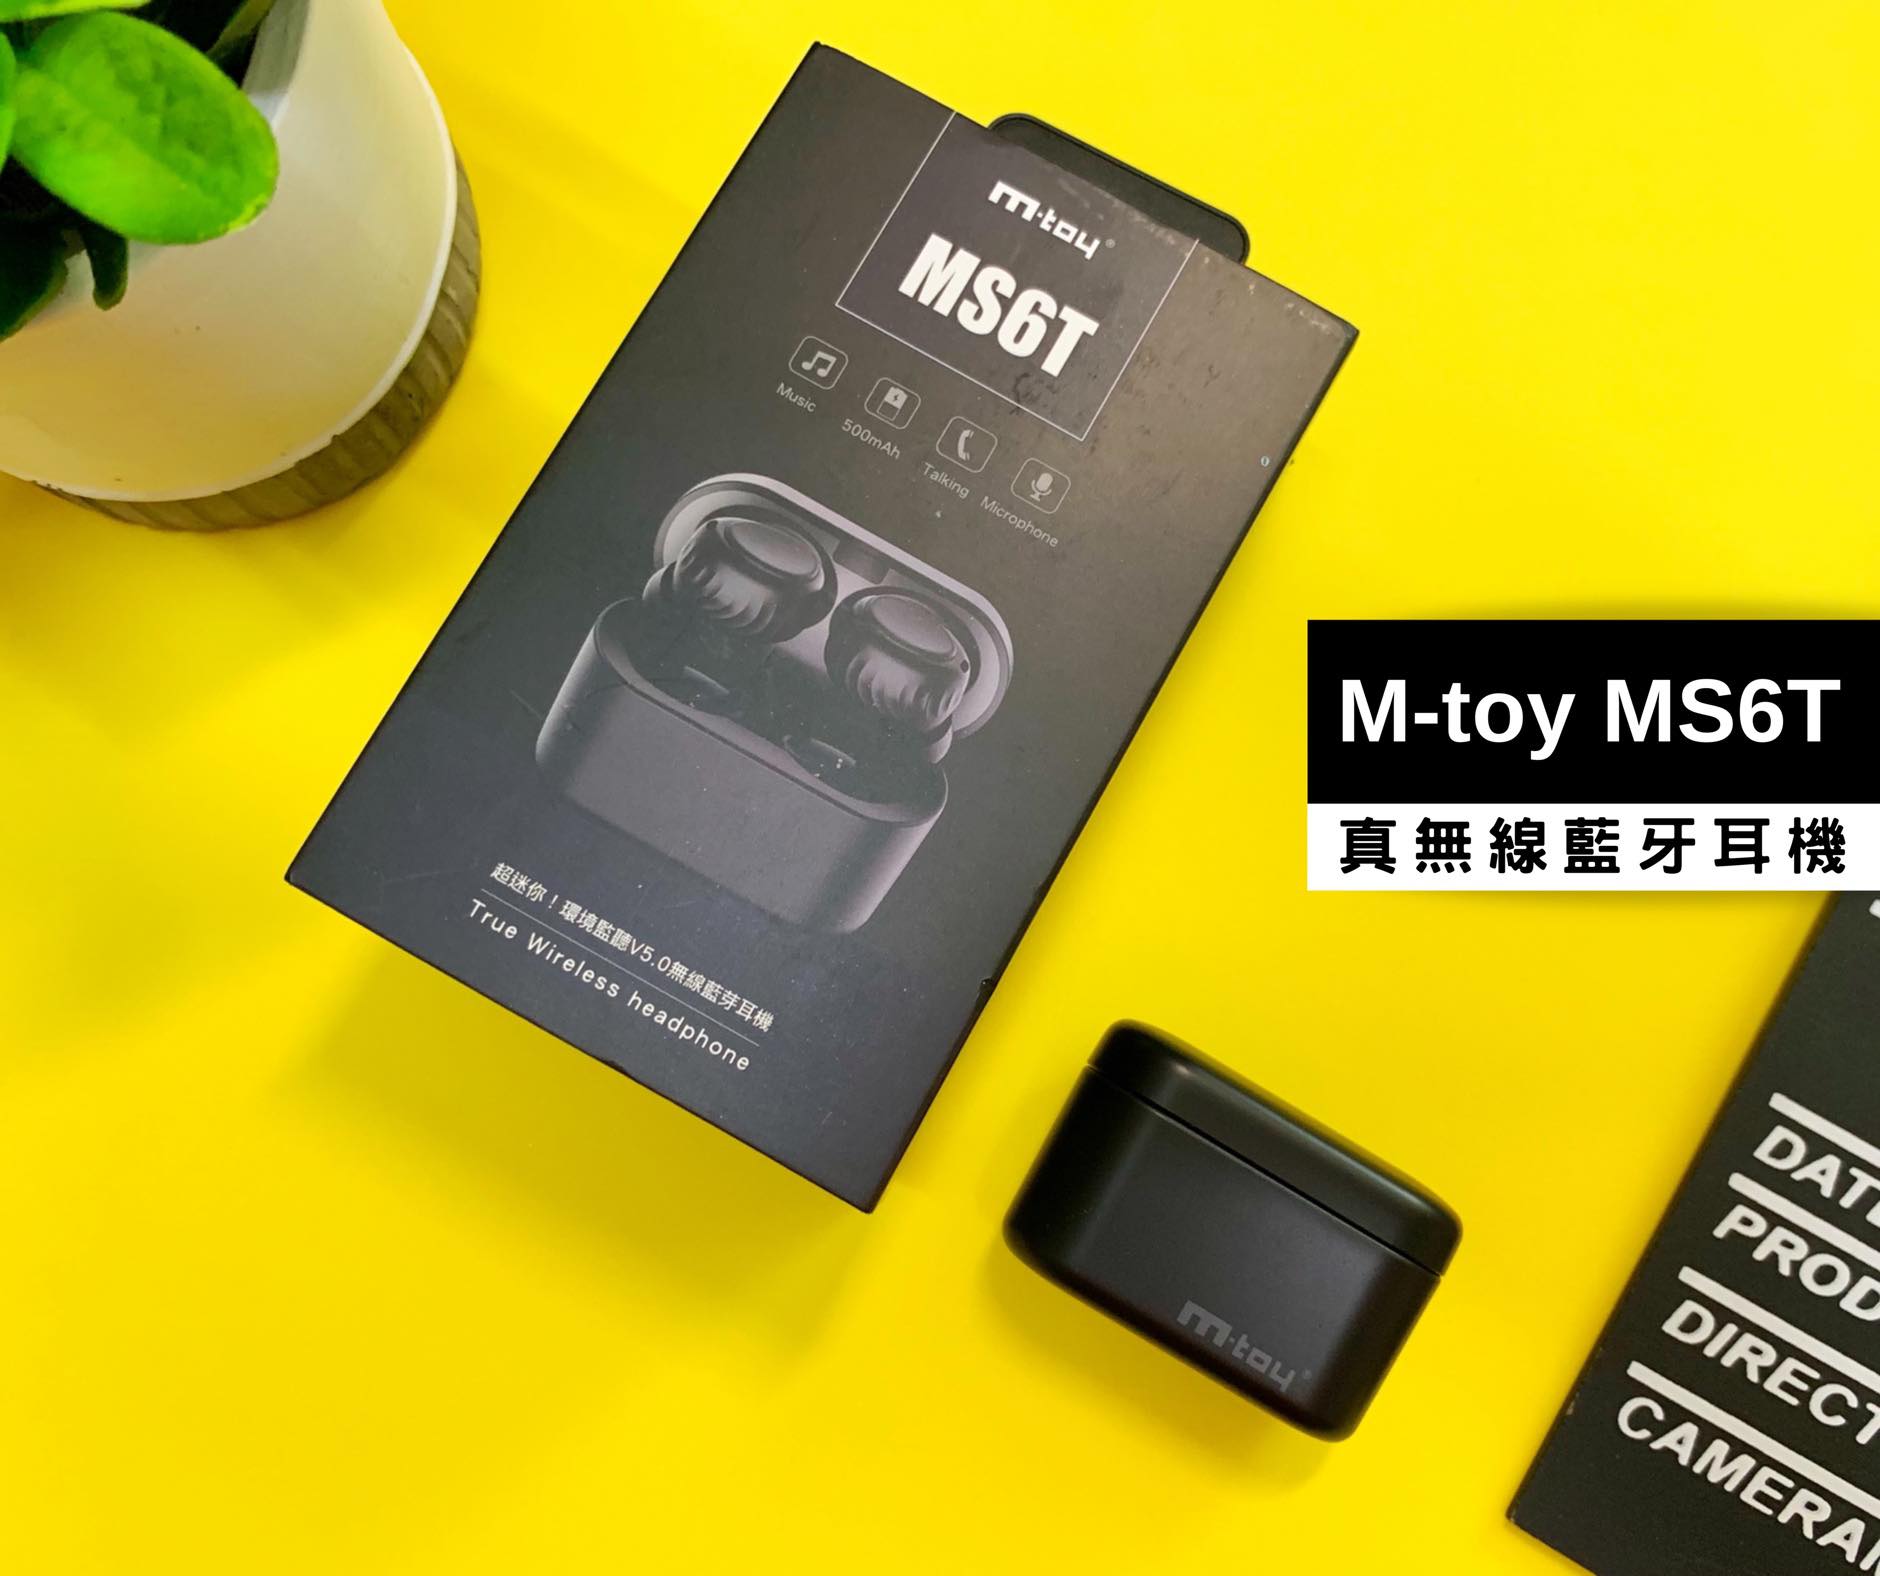 M-toy MS6T 真無線藍牙耳機 – 具備環境監聽的千元級別耳機